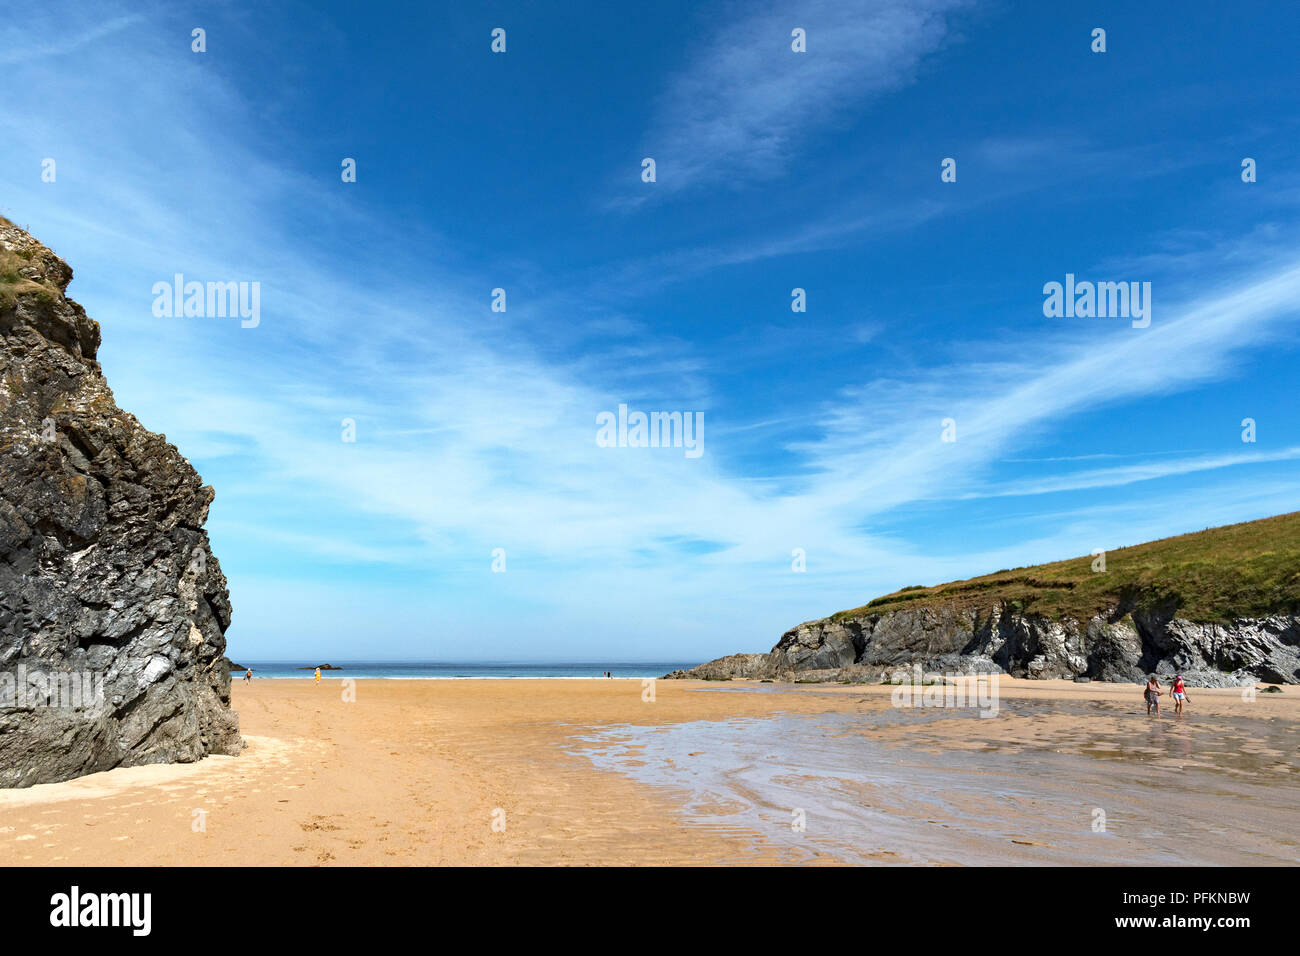 sunny summer weather polly joke beach, porth joke, cornwall, england, britain, uk, Stock Photo